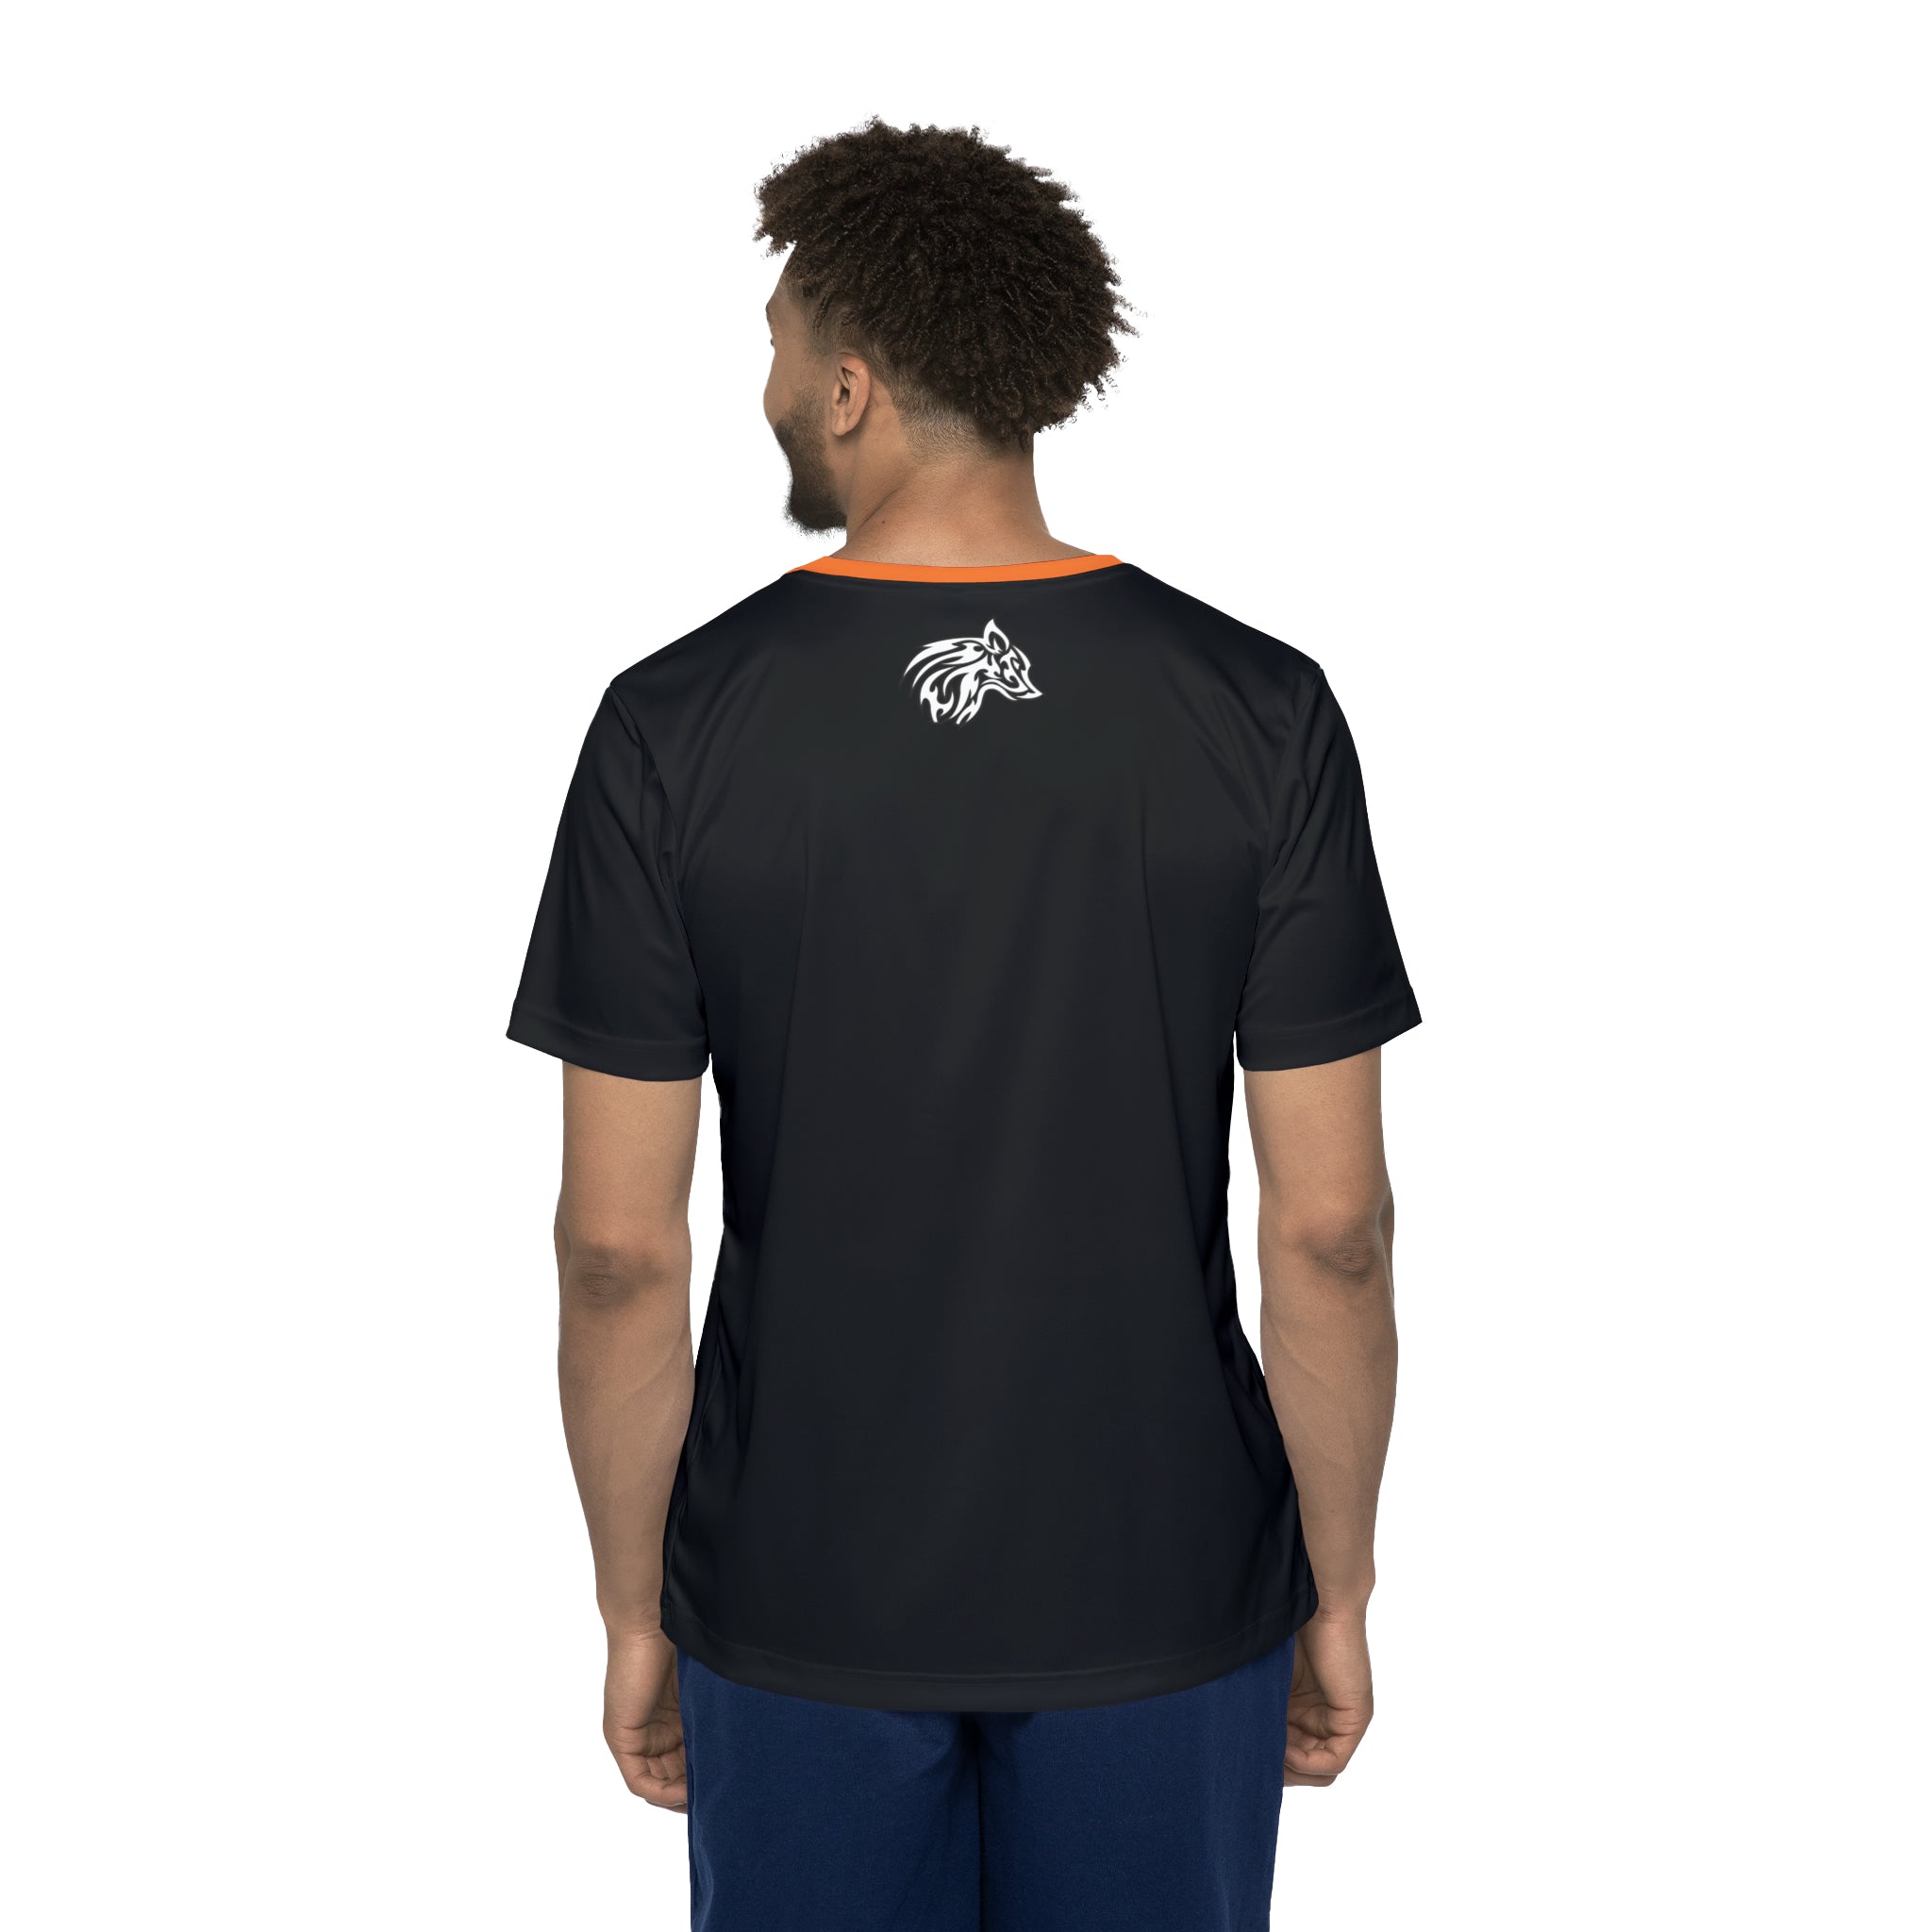 Viper Men's Performance T-shirt Black Edition